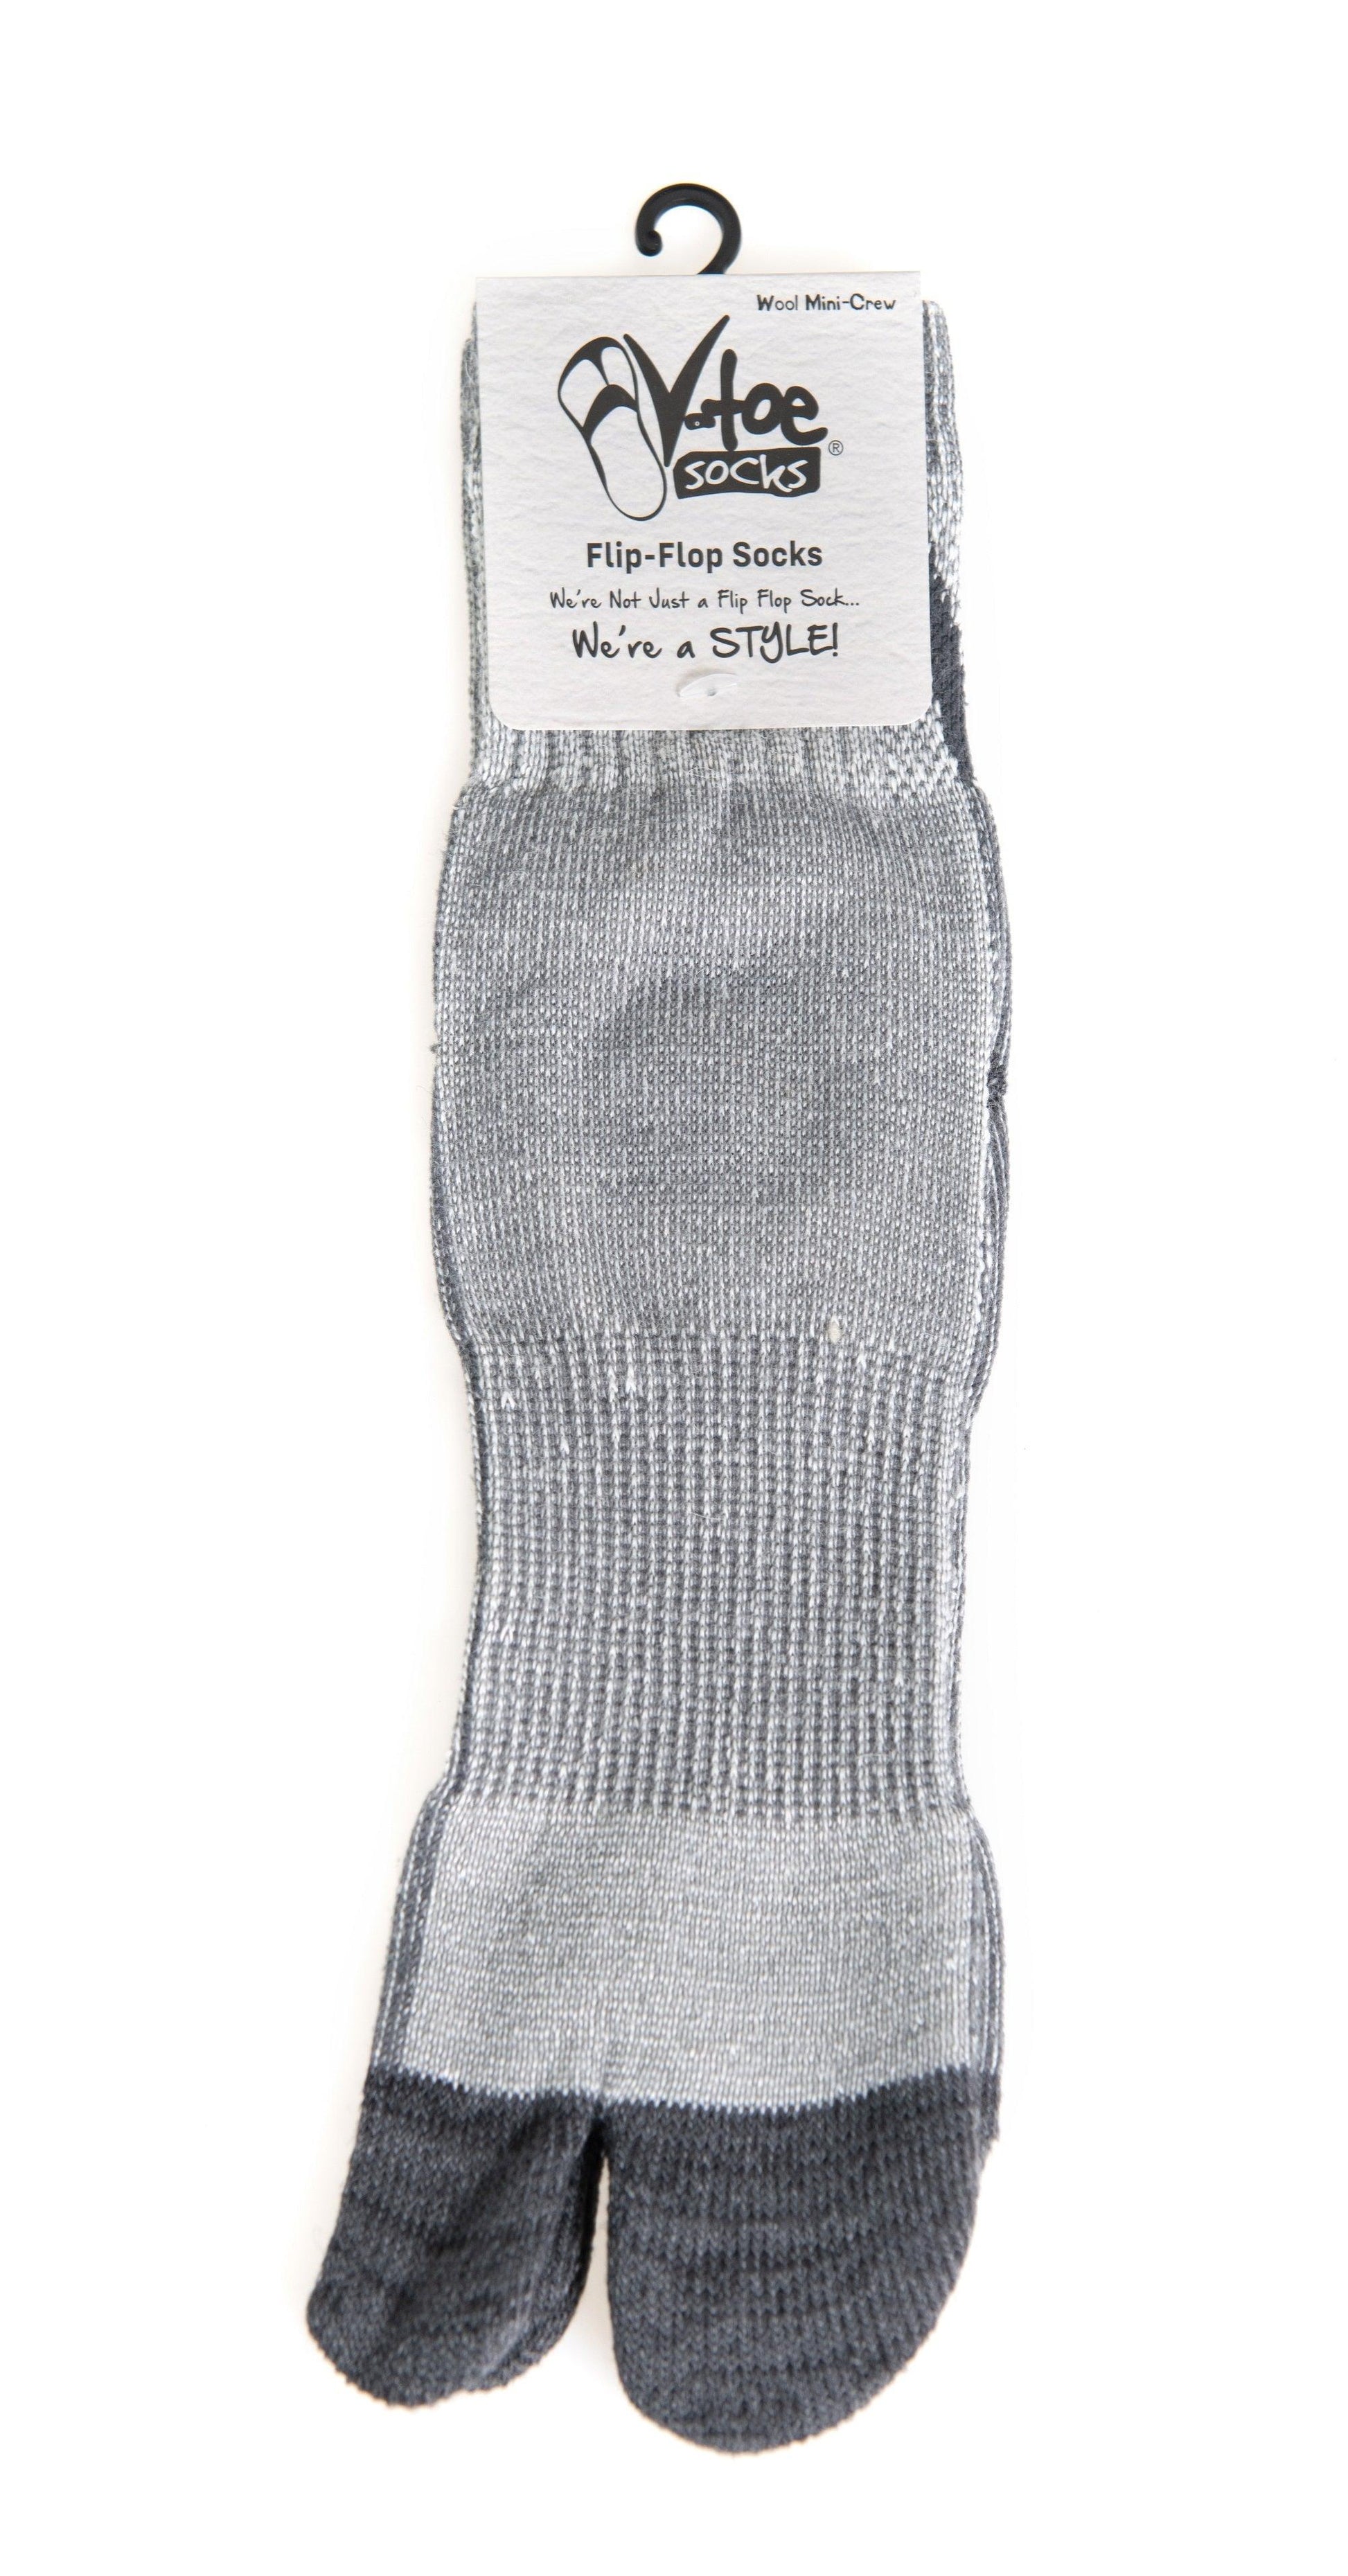 V-Toe Wool Light Grey Casual or Hiking Flip-Flop Tabi Big Toe Chaco Socks by V-Toe Socks, Inc - The Hammer Sports